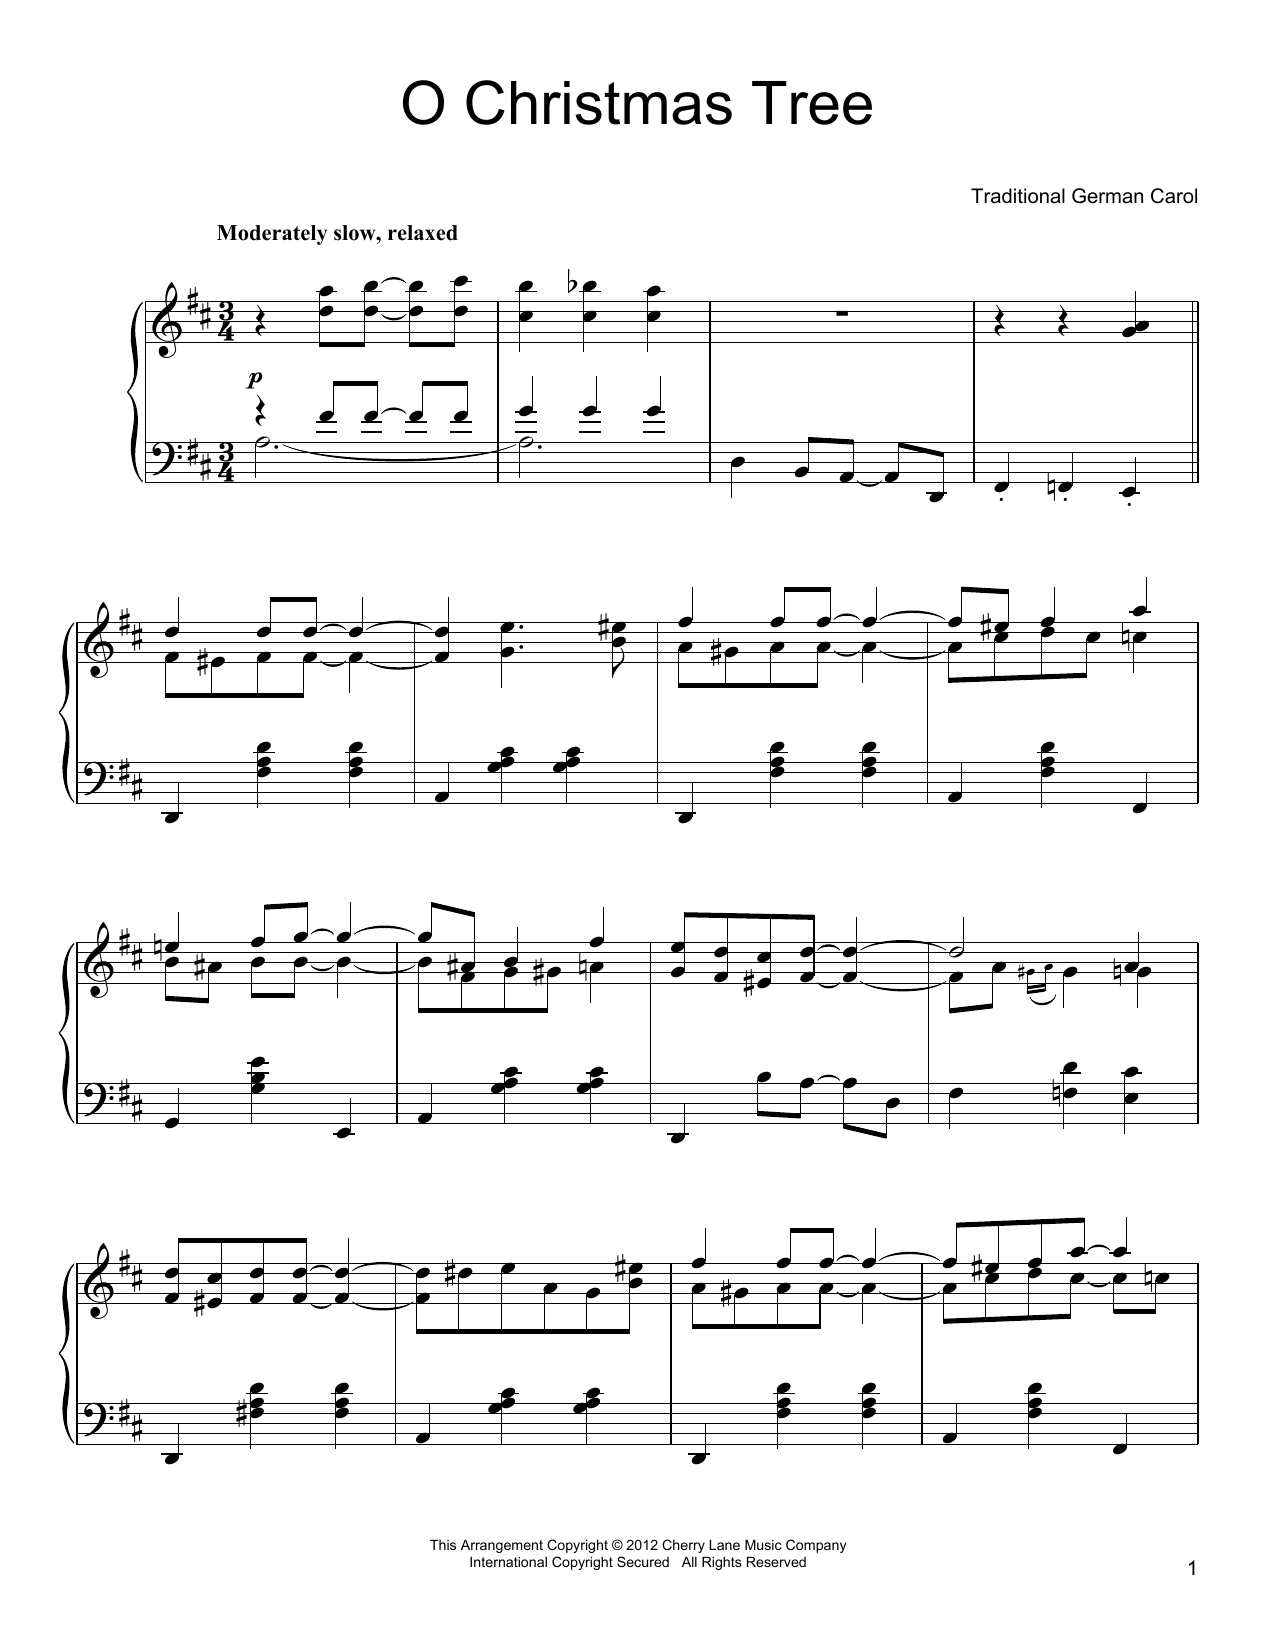 Traditional German Carol O Christmas Tree Sheet Music Notes & Chords for Piano - Download or Print PDF